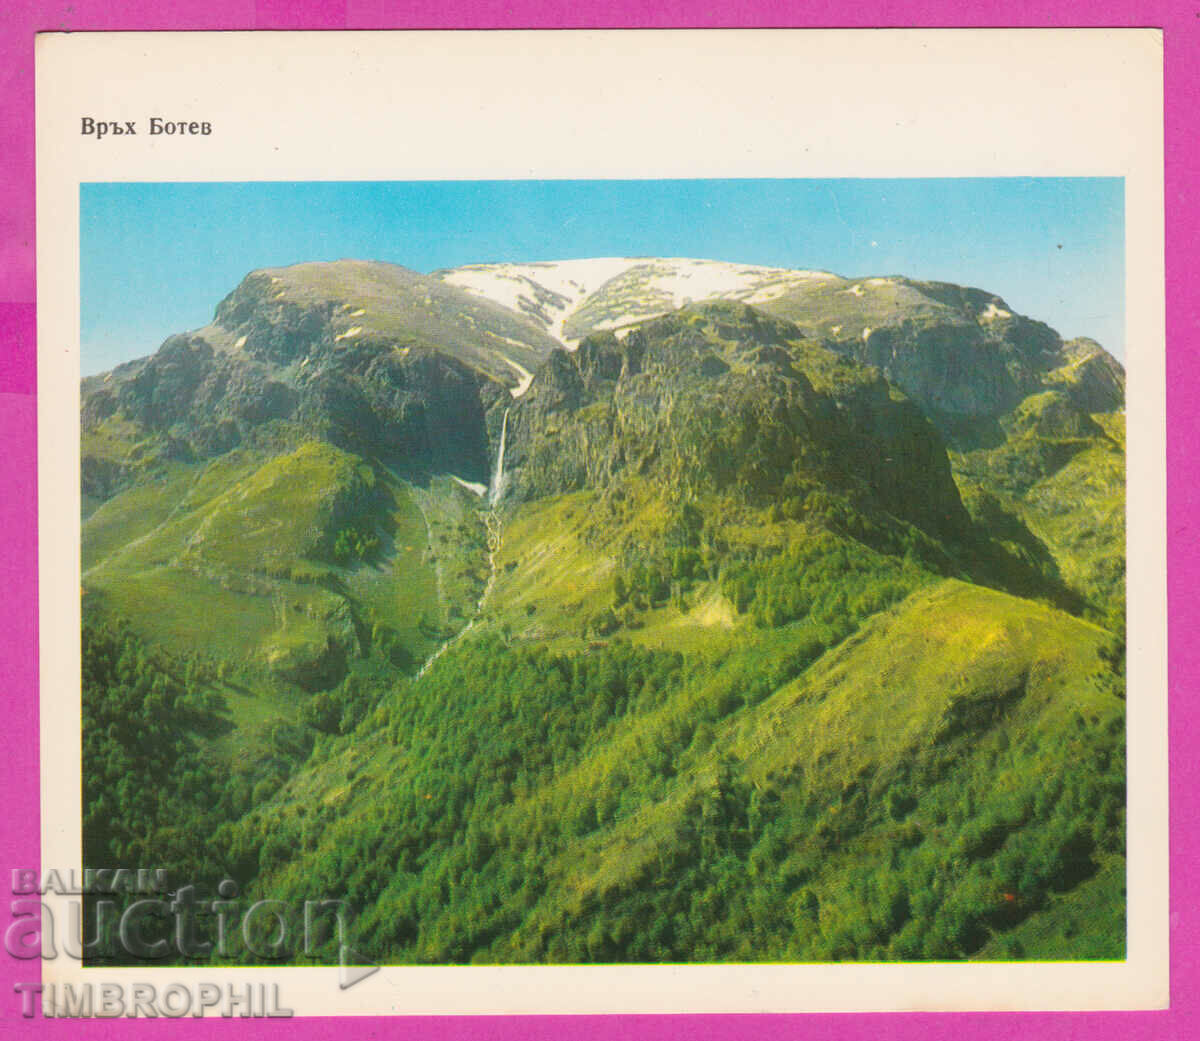 274565 / Връх Ботев се намира в Троянско-Калоферска планина